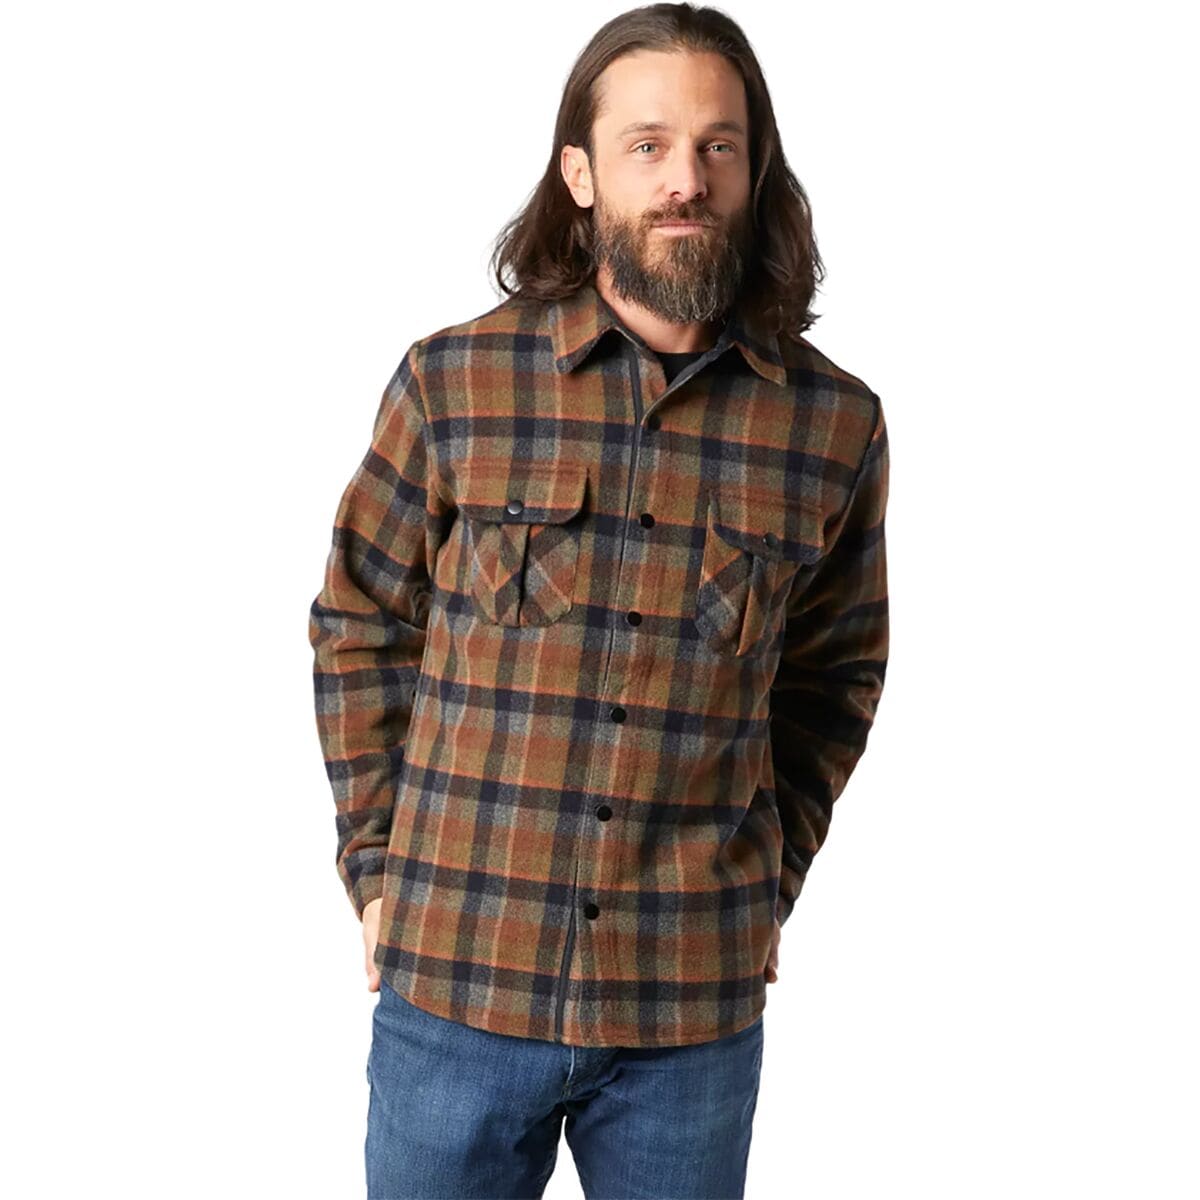 Anchor Line Shirt Jacket - Men